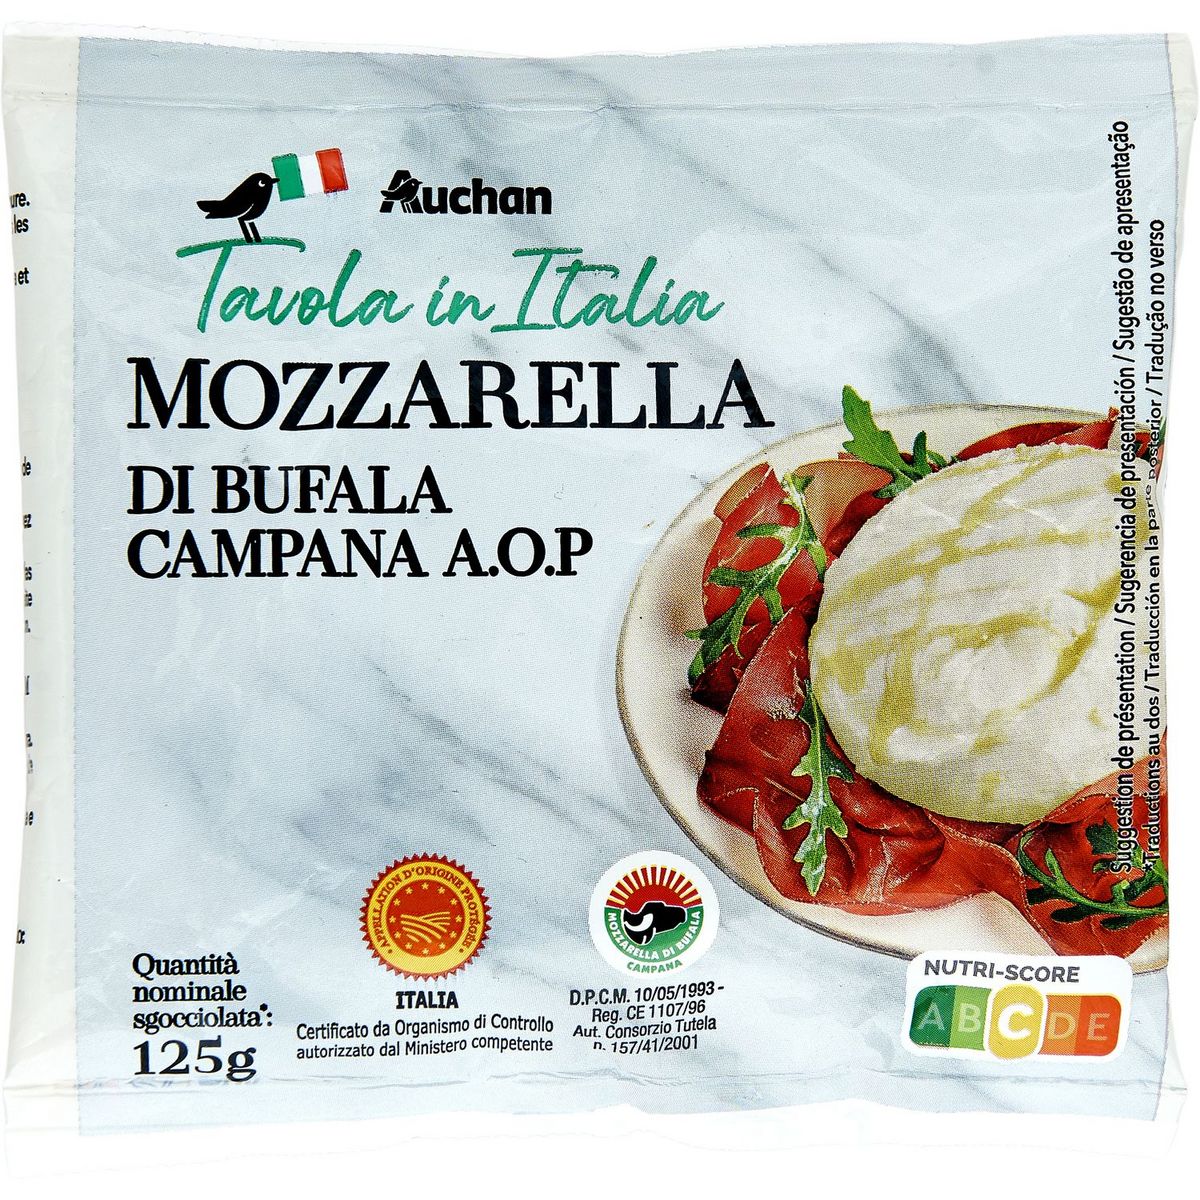 AUCHAN TAVOLA IN ITALIA Mozzarella di Bufala Campana AOP 125g